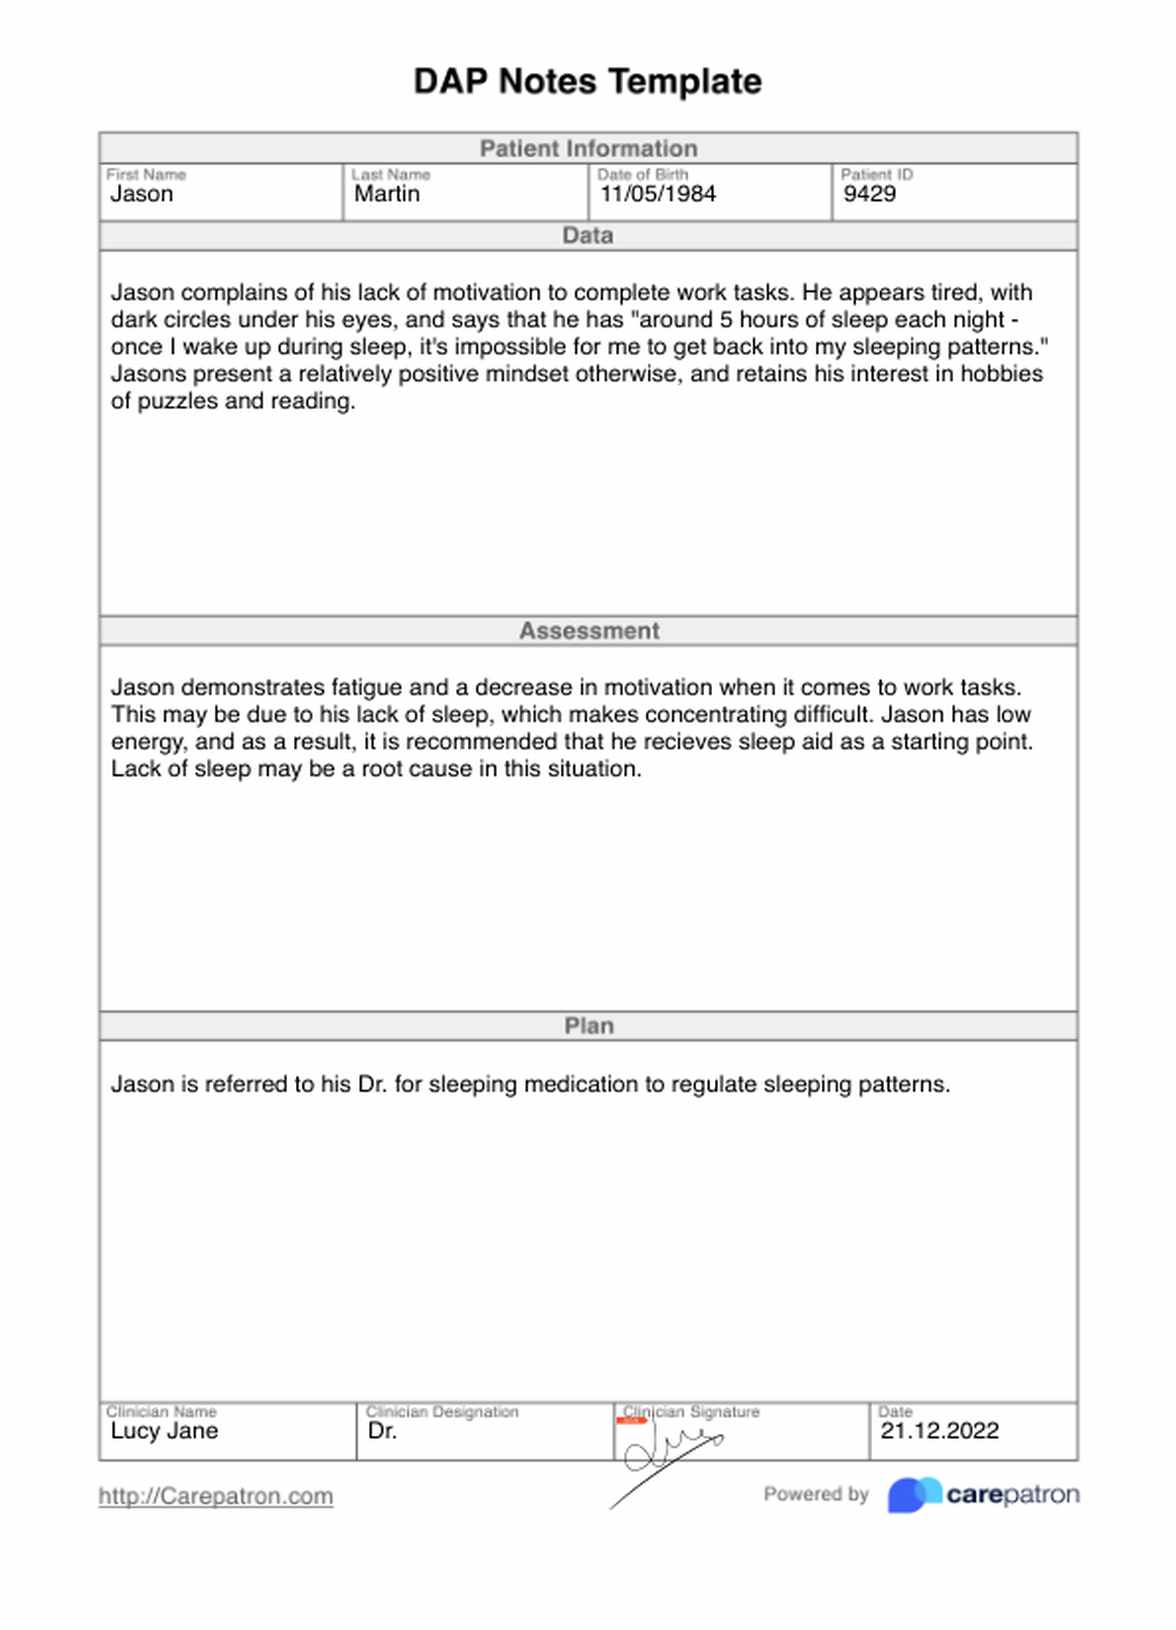 DAP Notes Template PDF Example